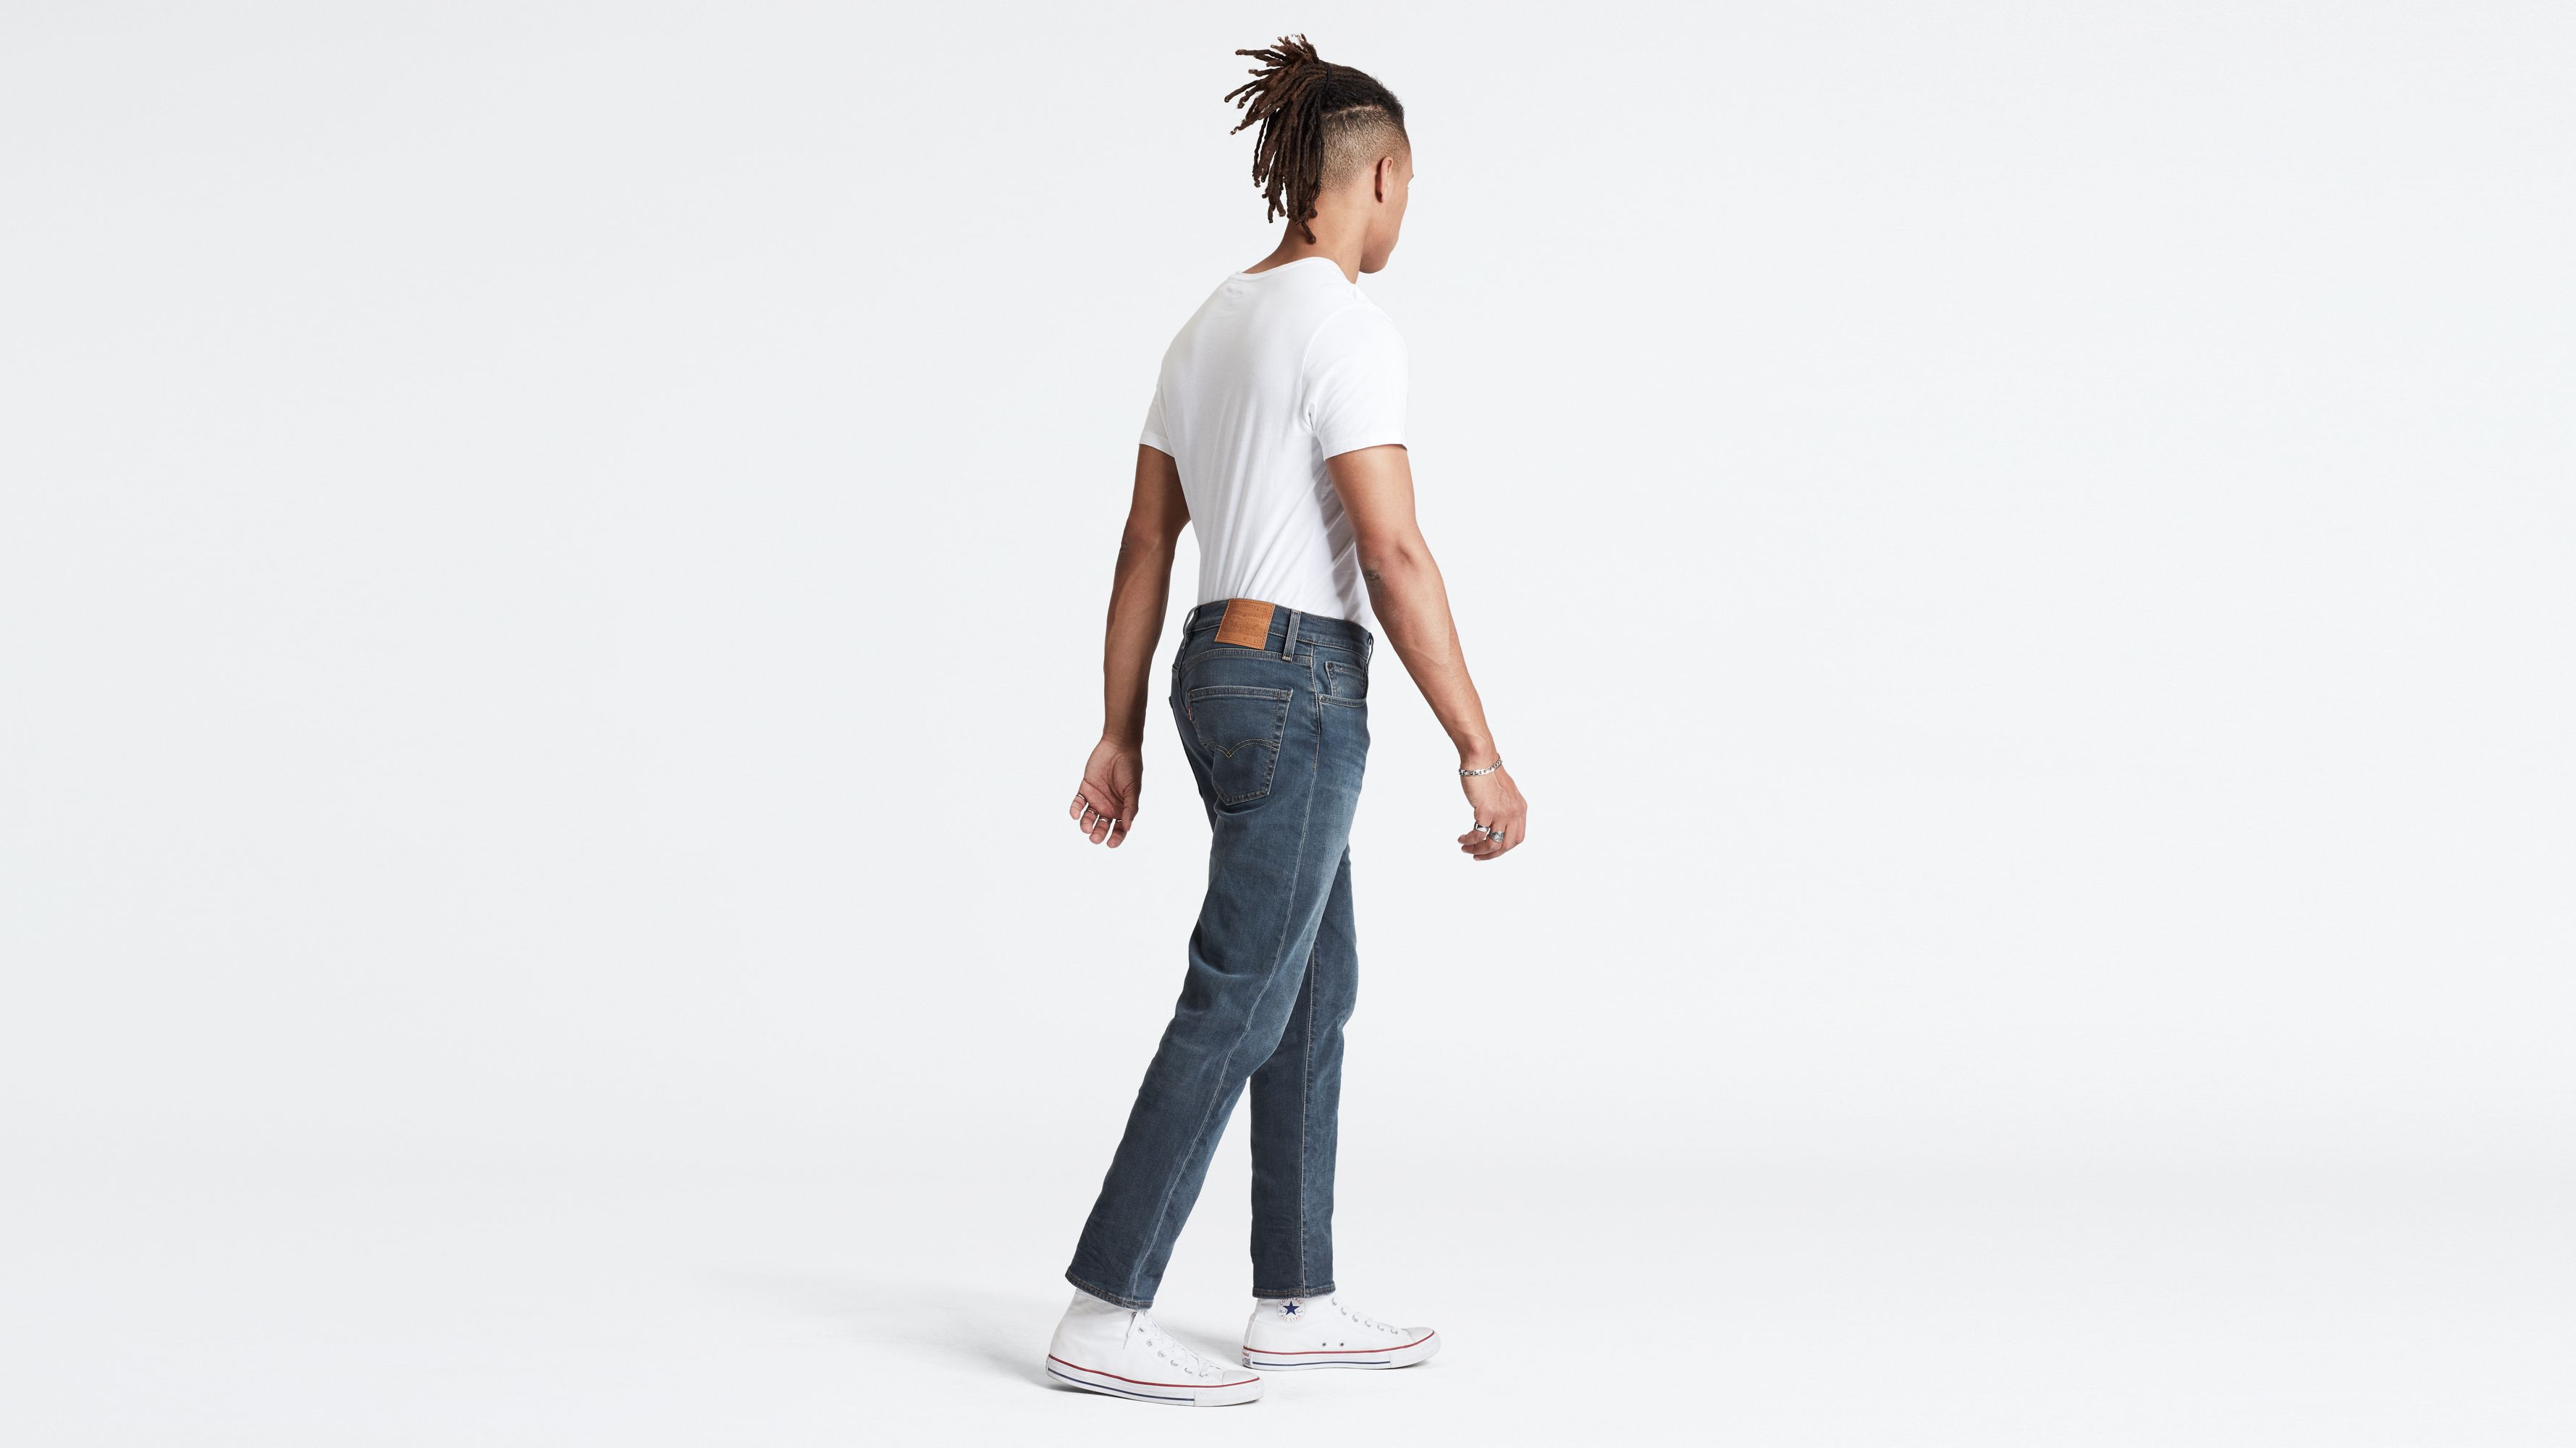 502 regular taper fit jeans